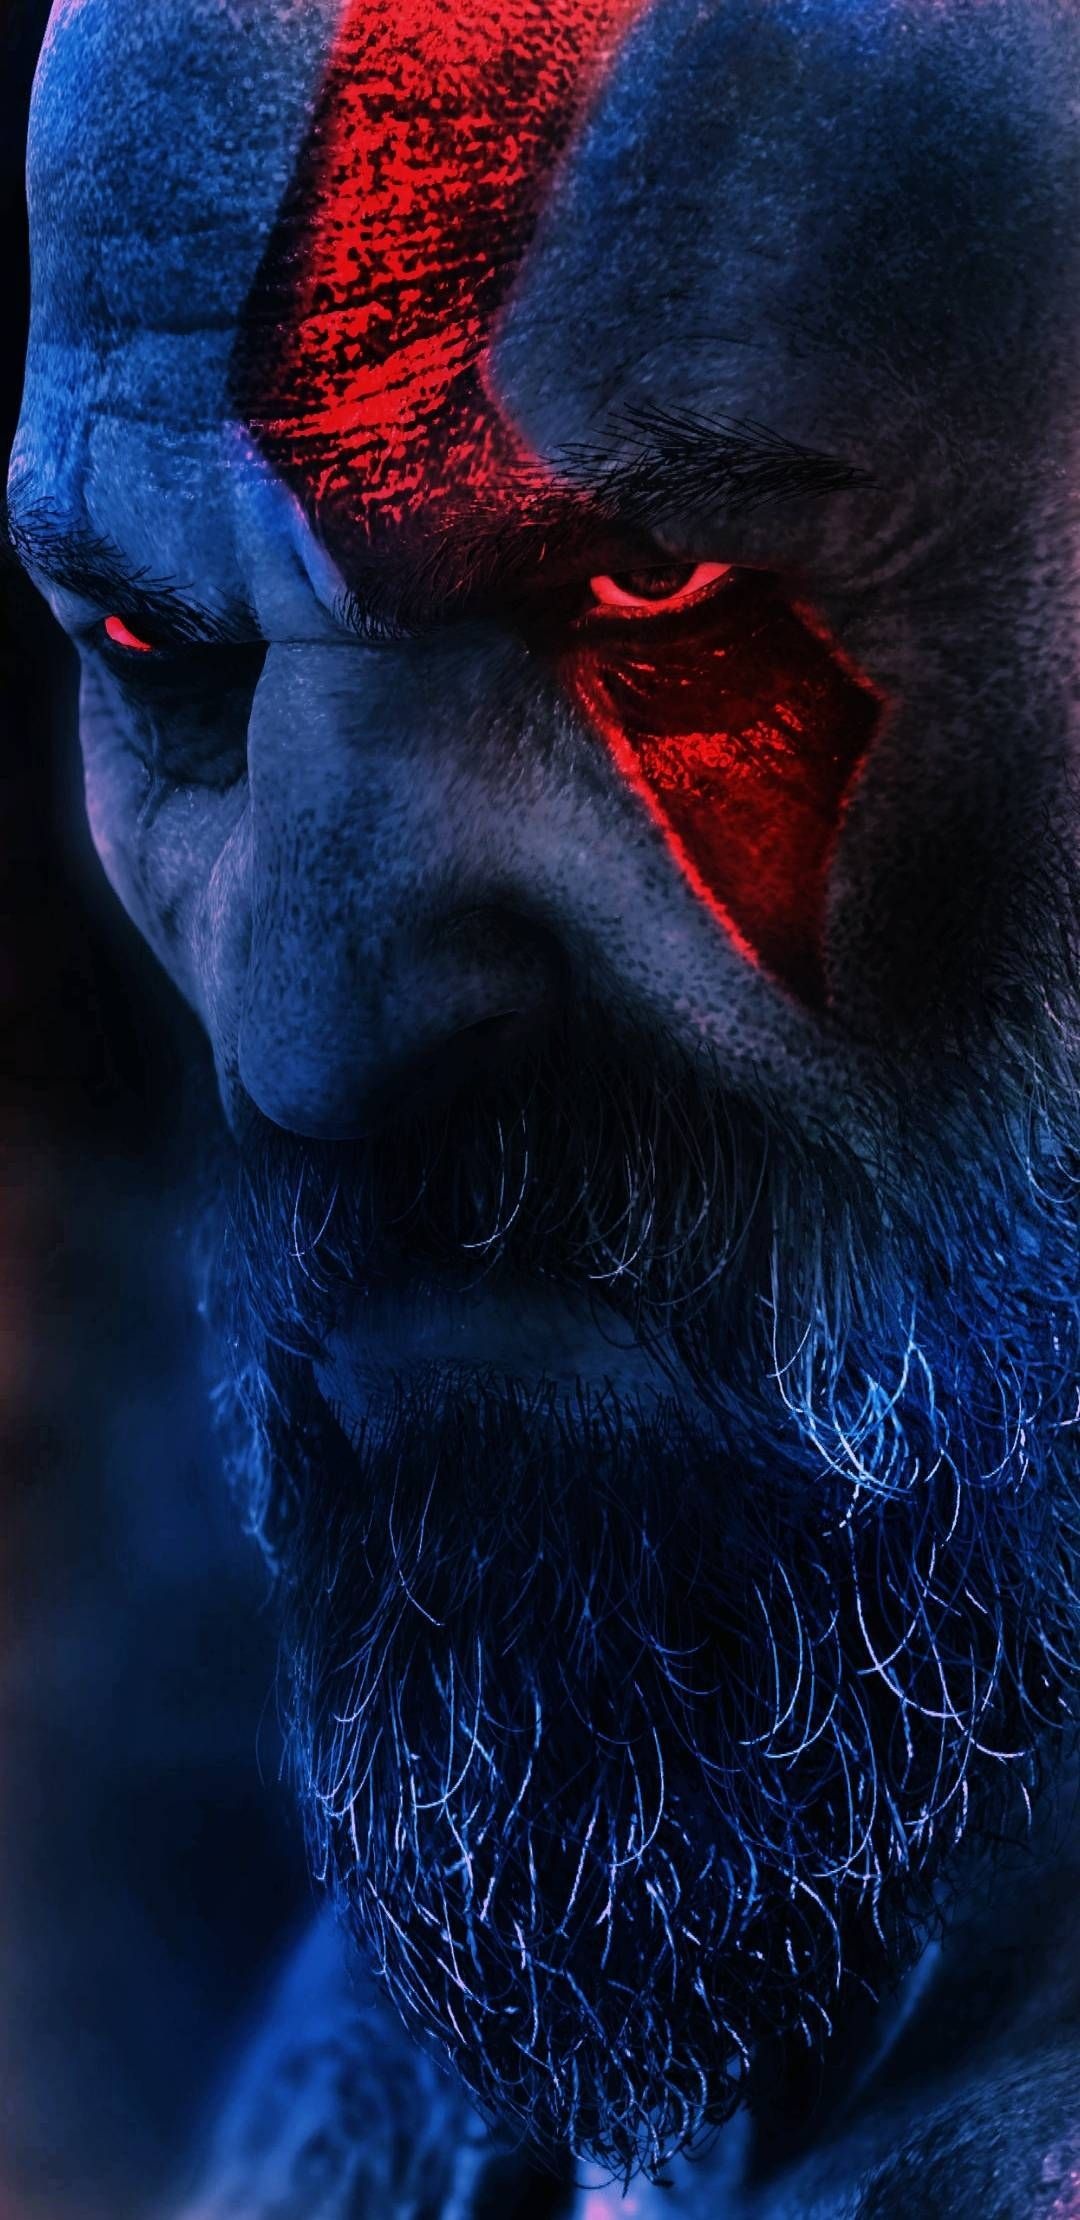 God of War phone wallpaper, Nokia gaming theme, Kratos's fierce presence, 1080x2220 HD Handy